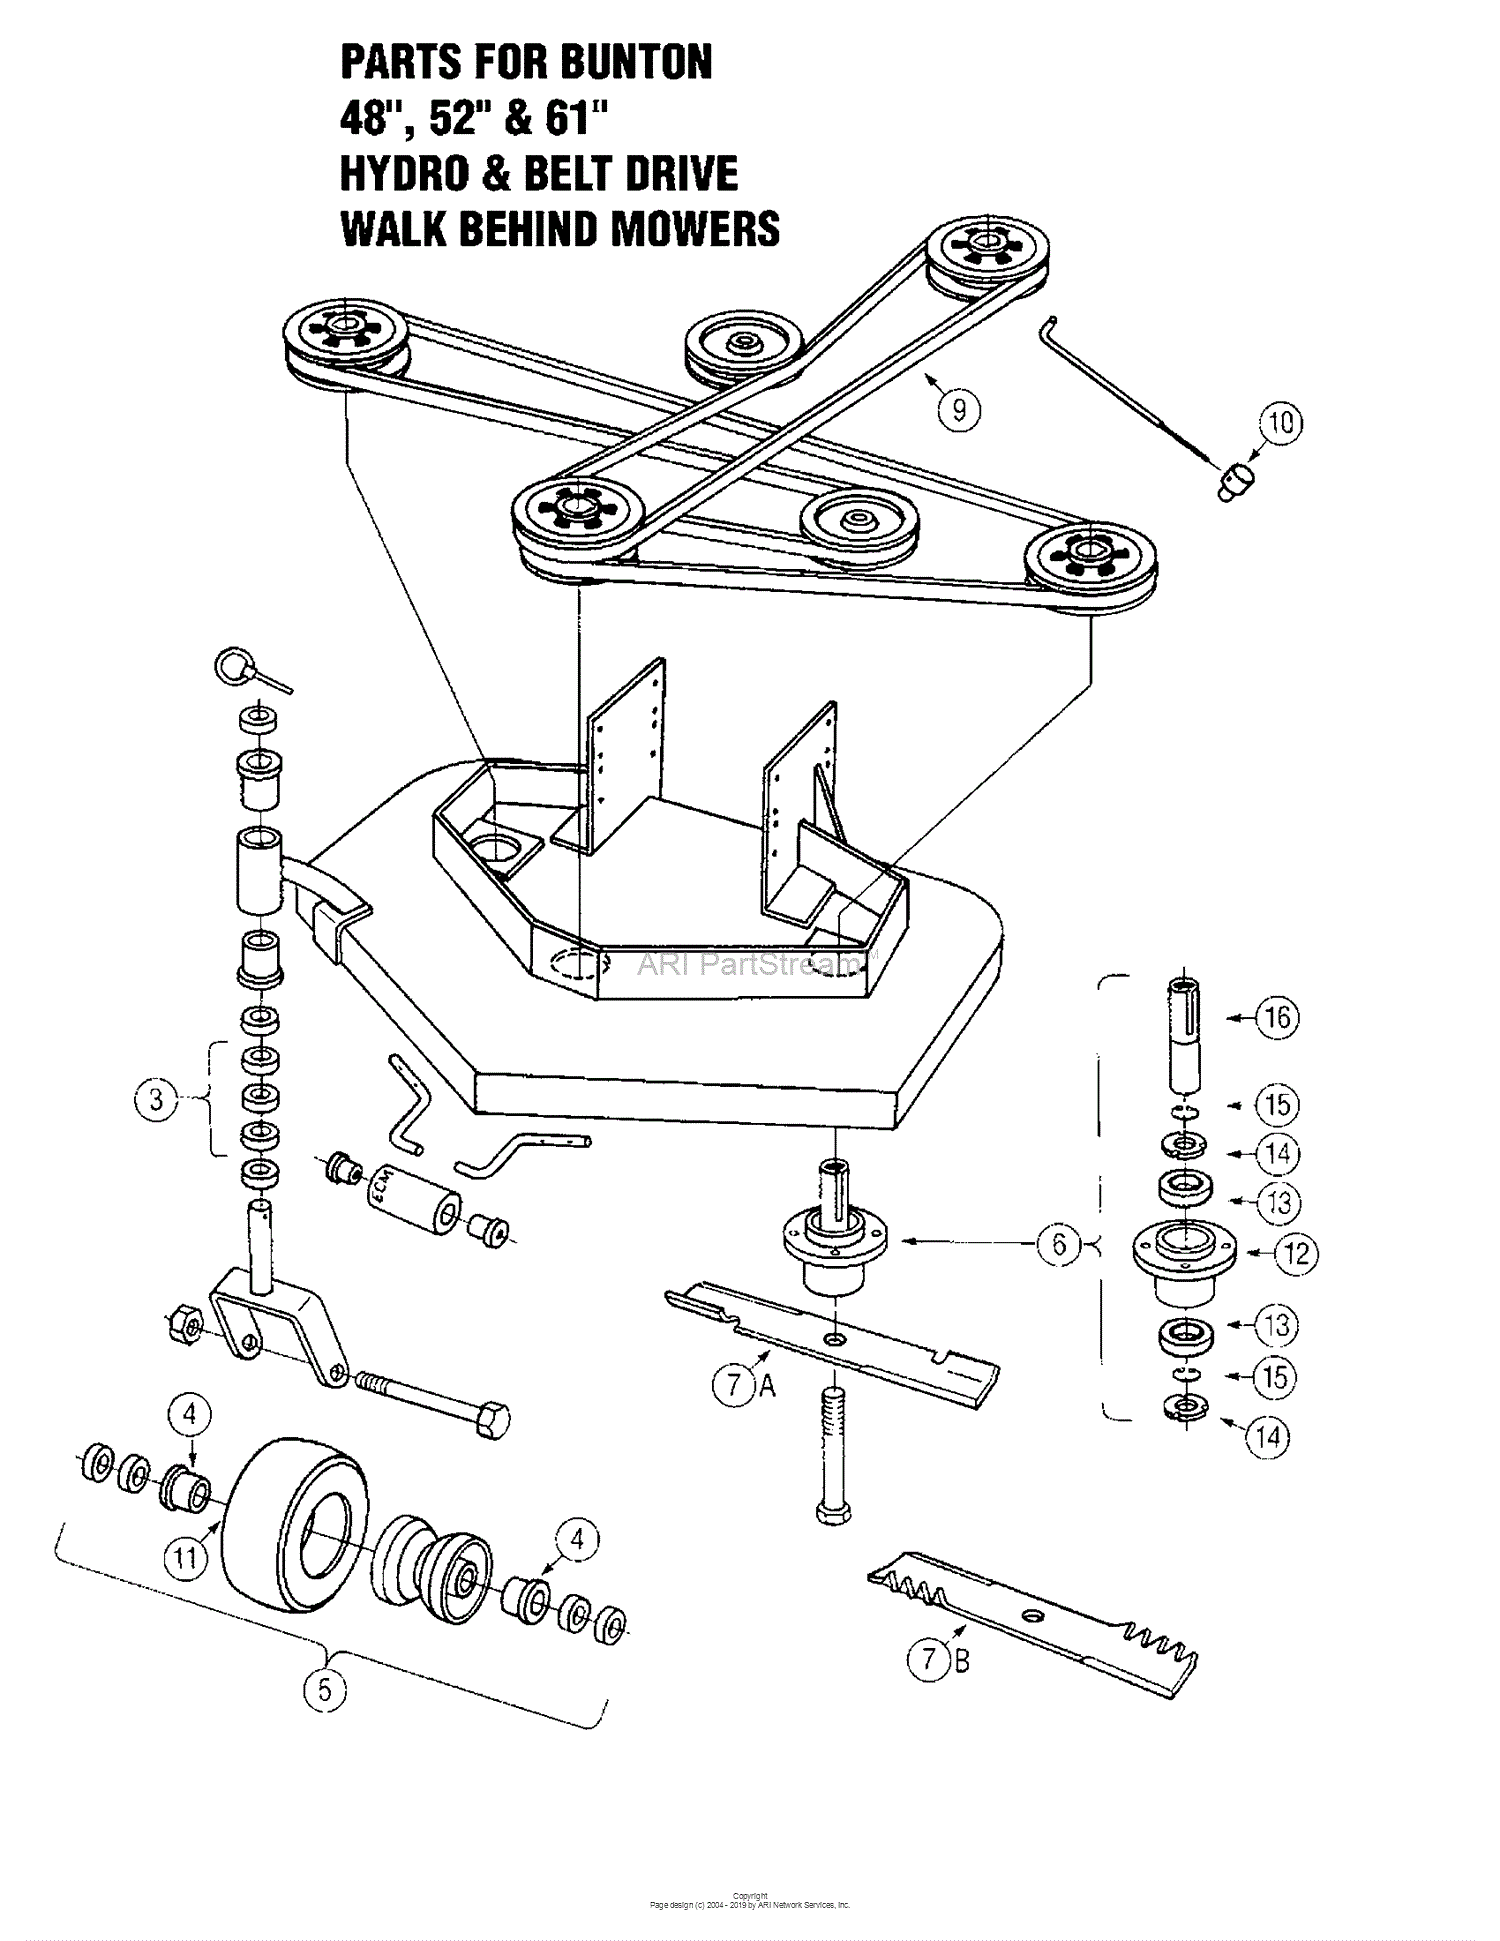 Bunton Mower Parts Diagrams My Xxx Hot Girl